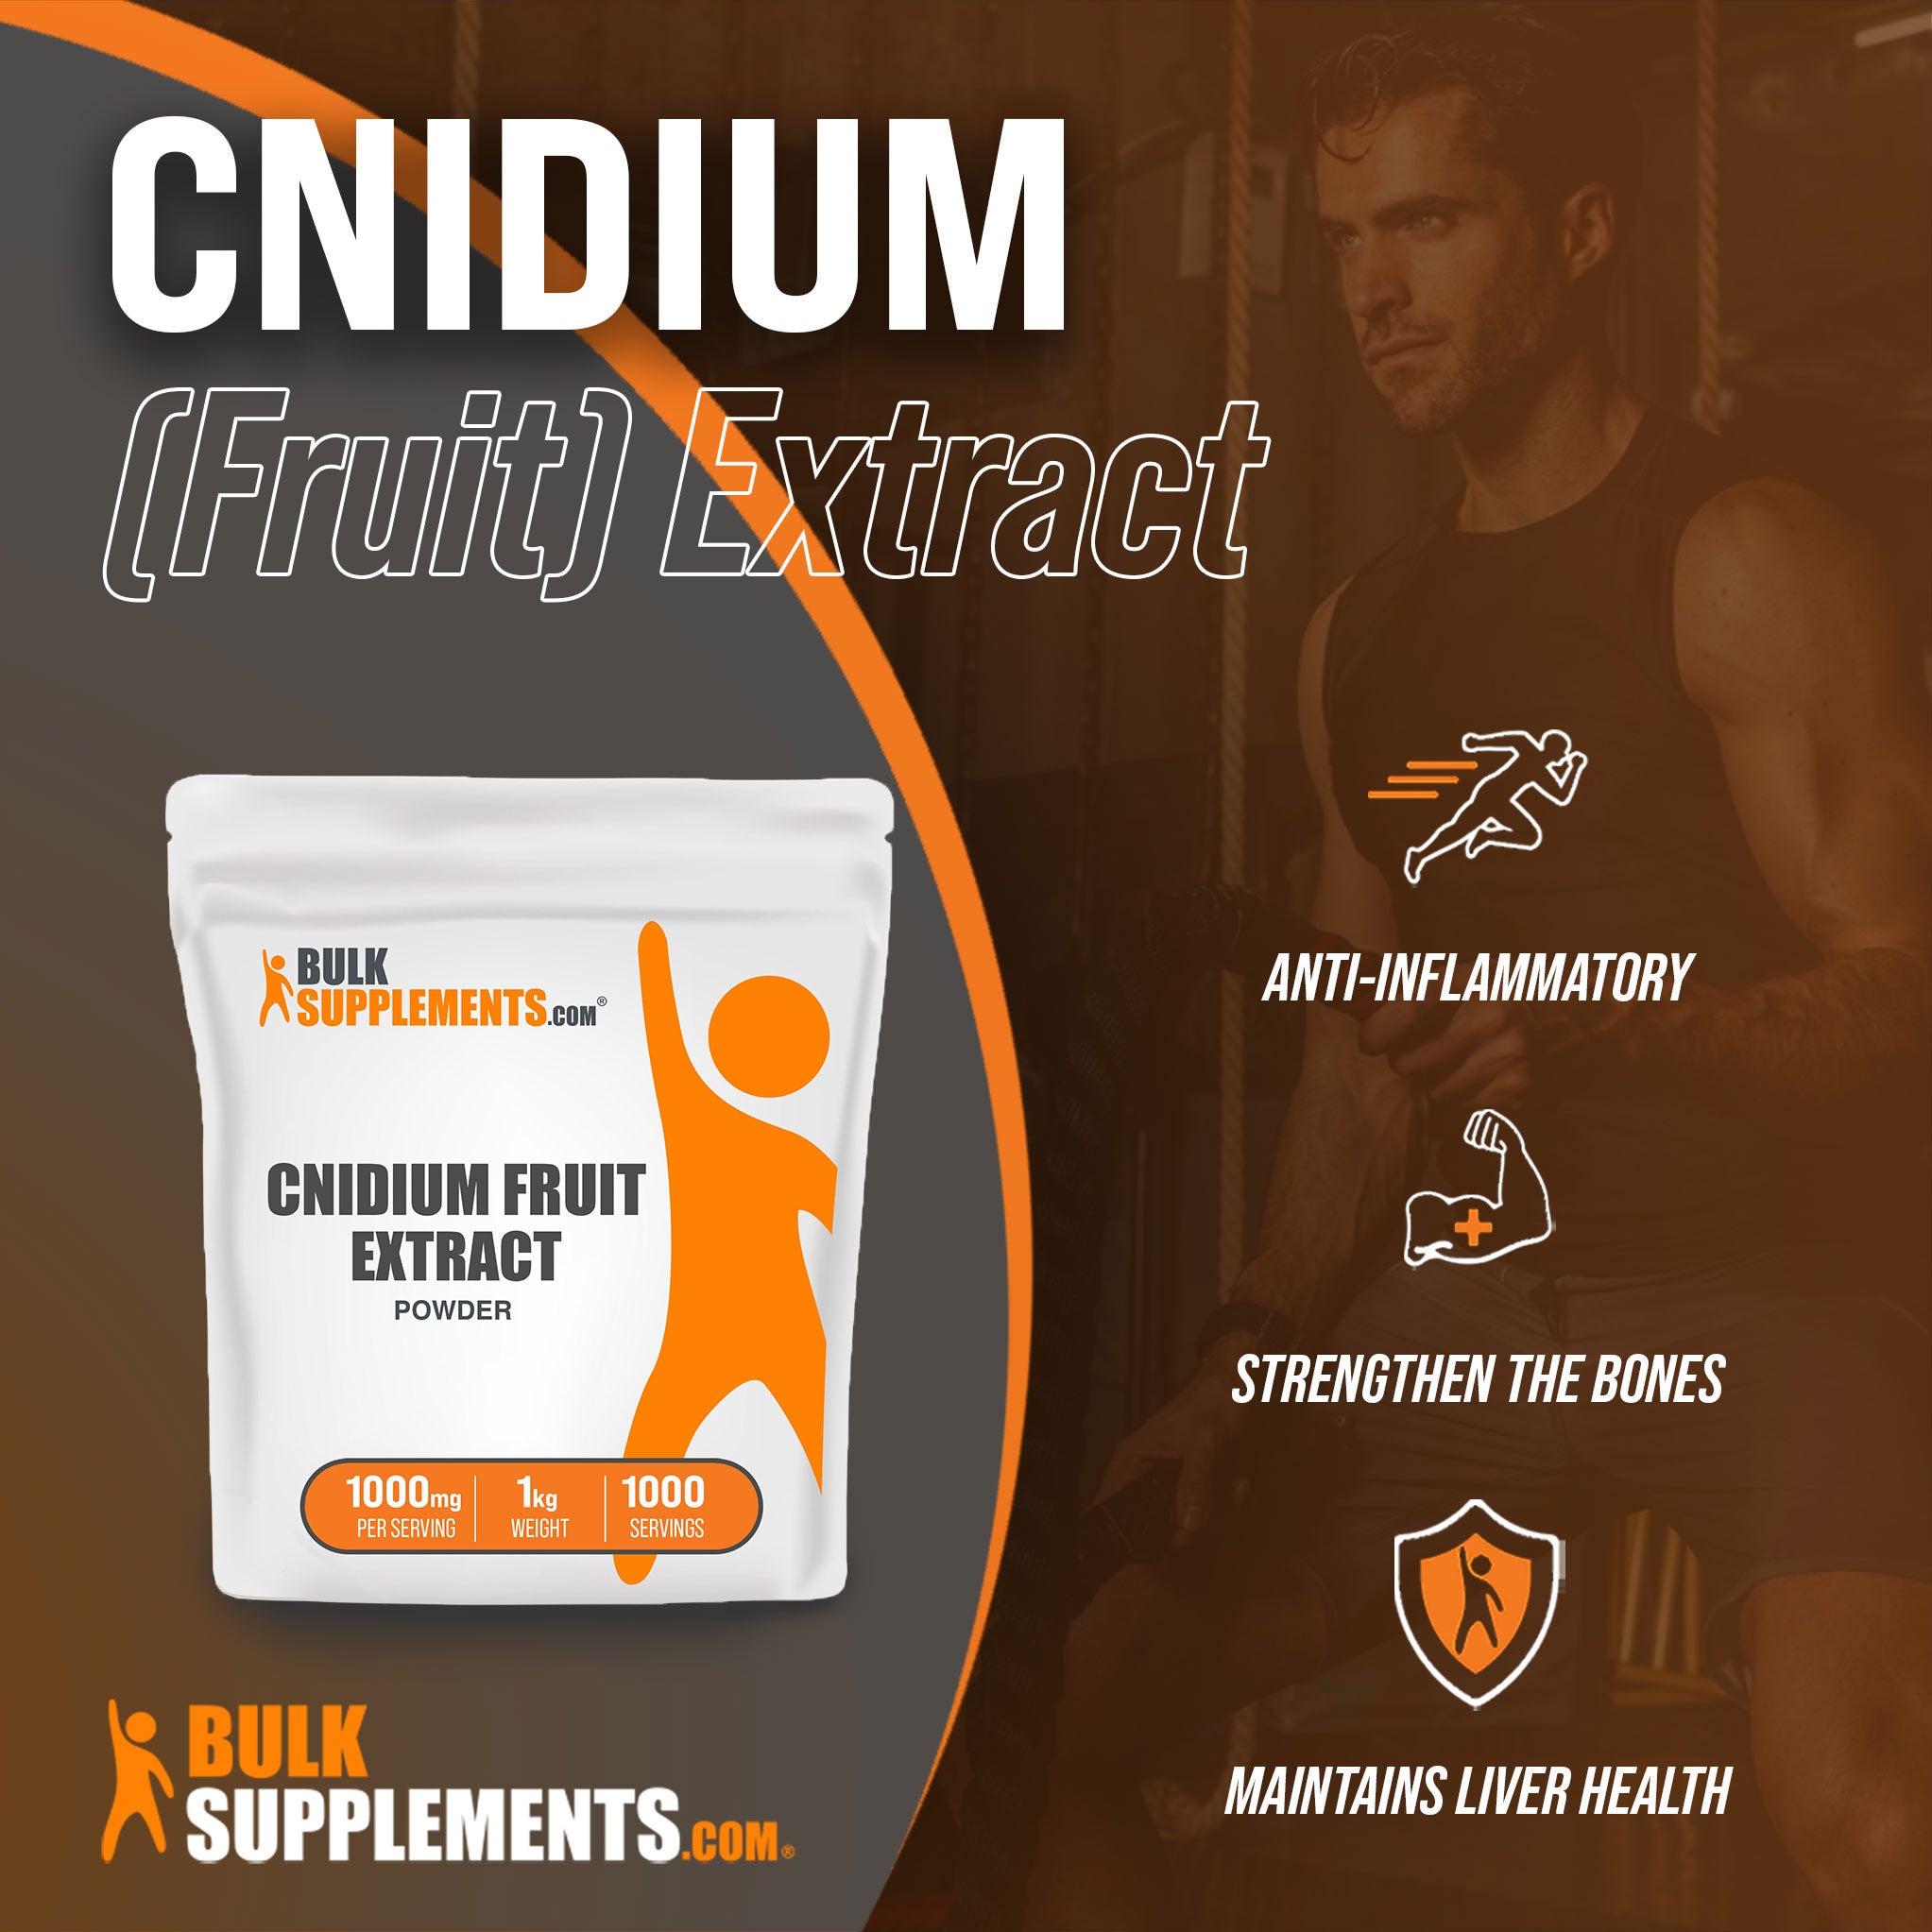 Benefits of Cnidium Extract; anti-inflammatory, strengthen the bones, maintains liver health